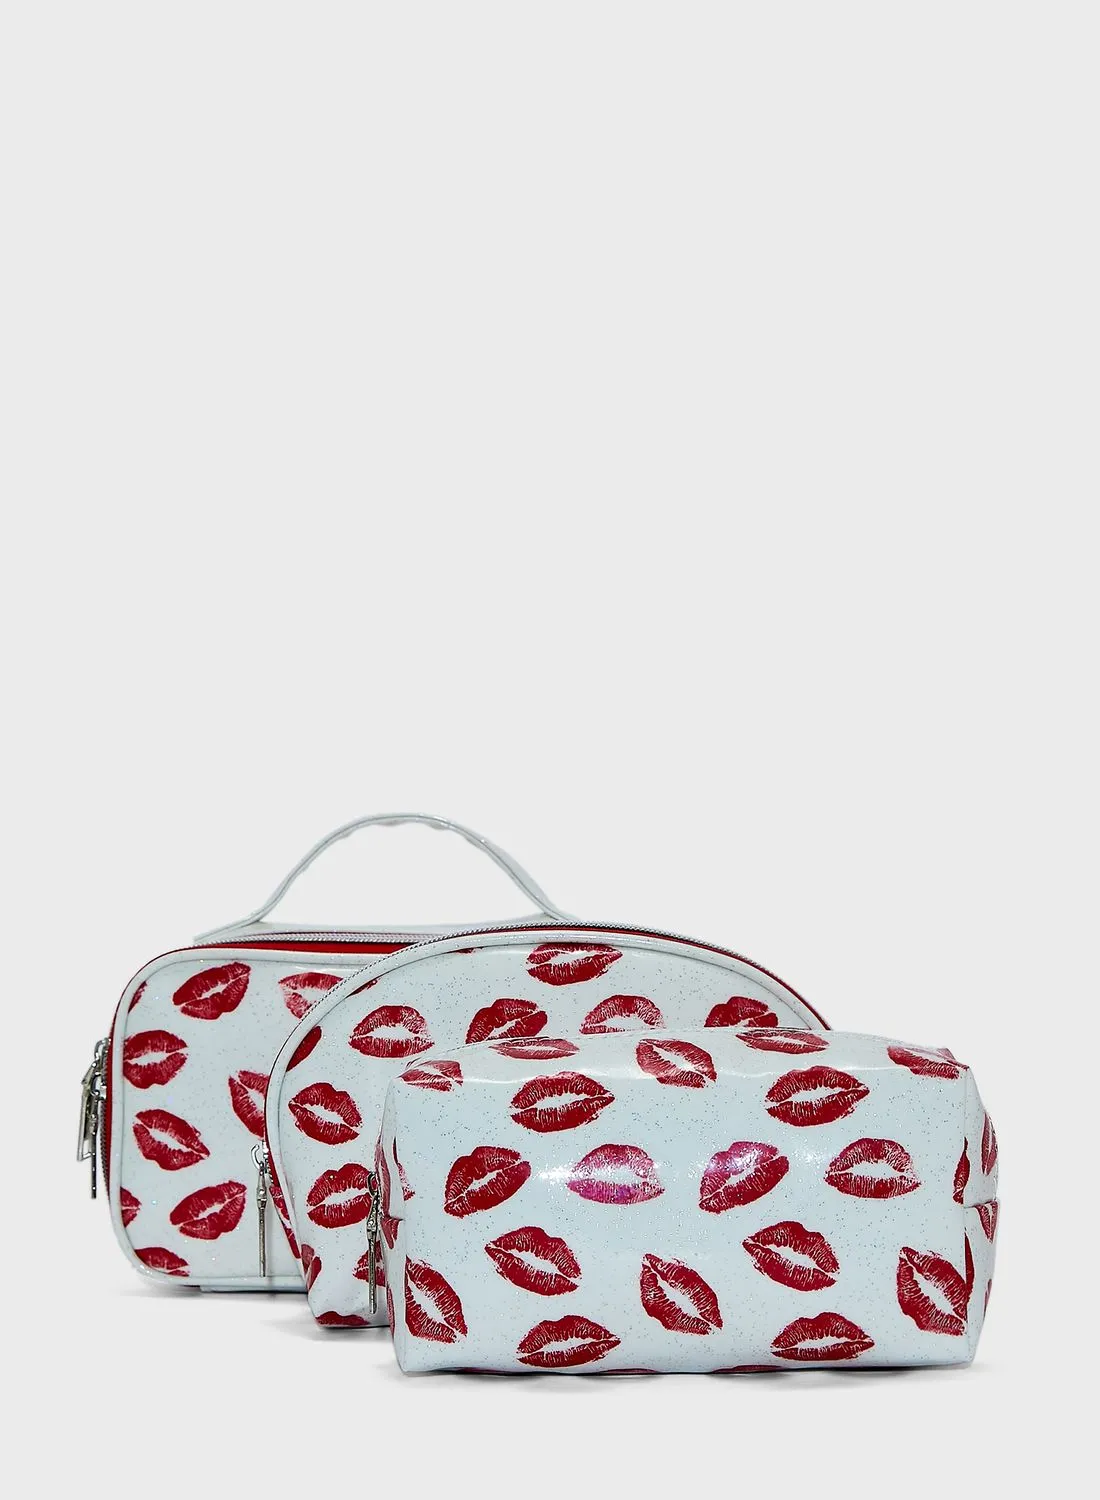 Ginger Red Lip Waterproof Cosmetic Bags